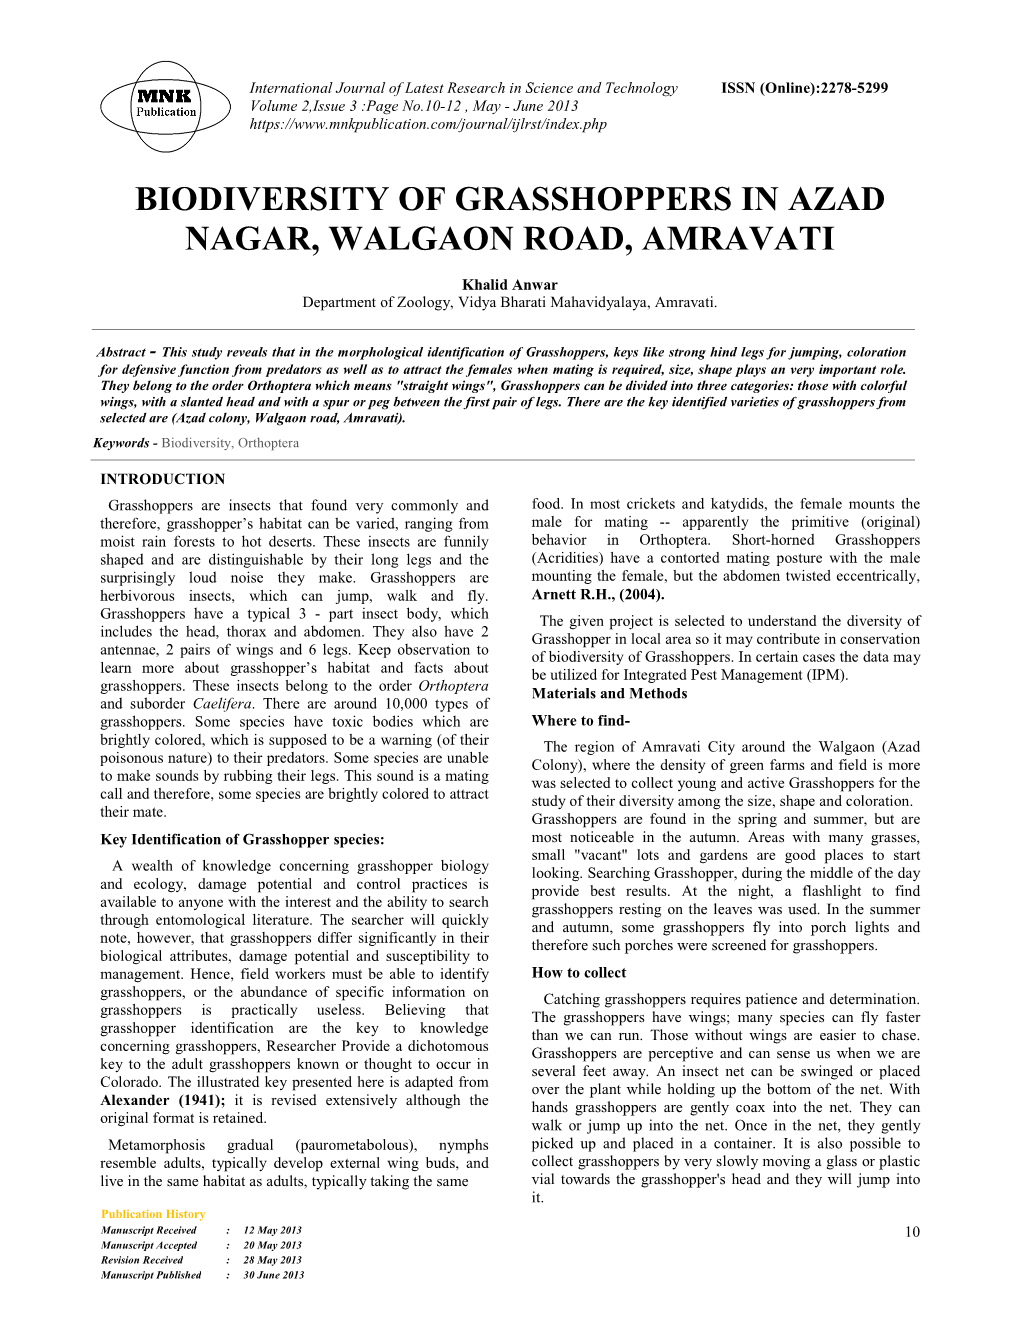 Biodiversity of Grasshoppers in Azad Nagar, Walgaon Road, Amravati